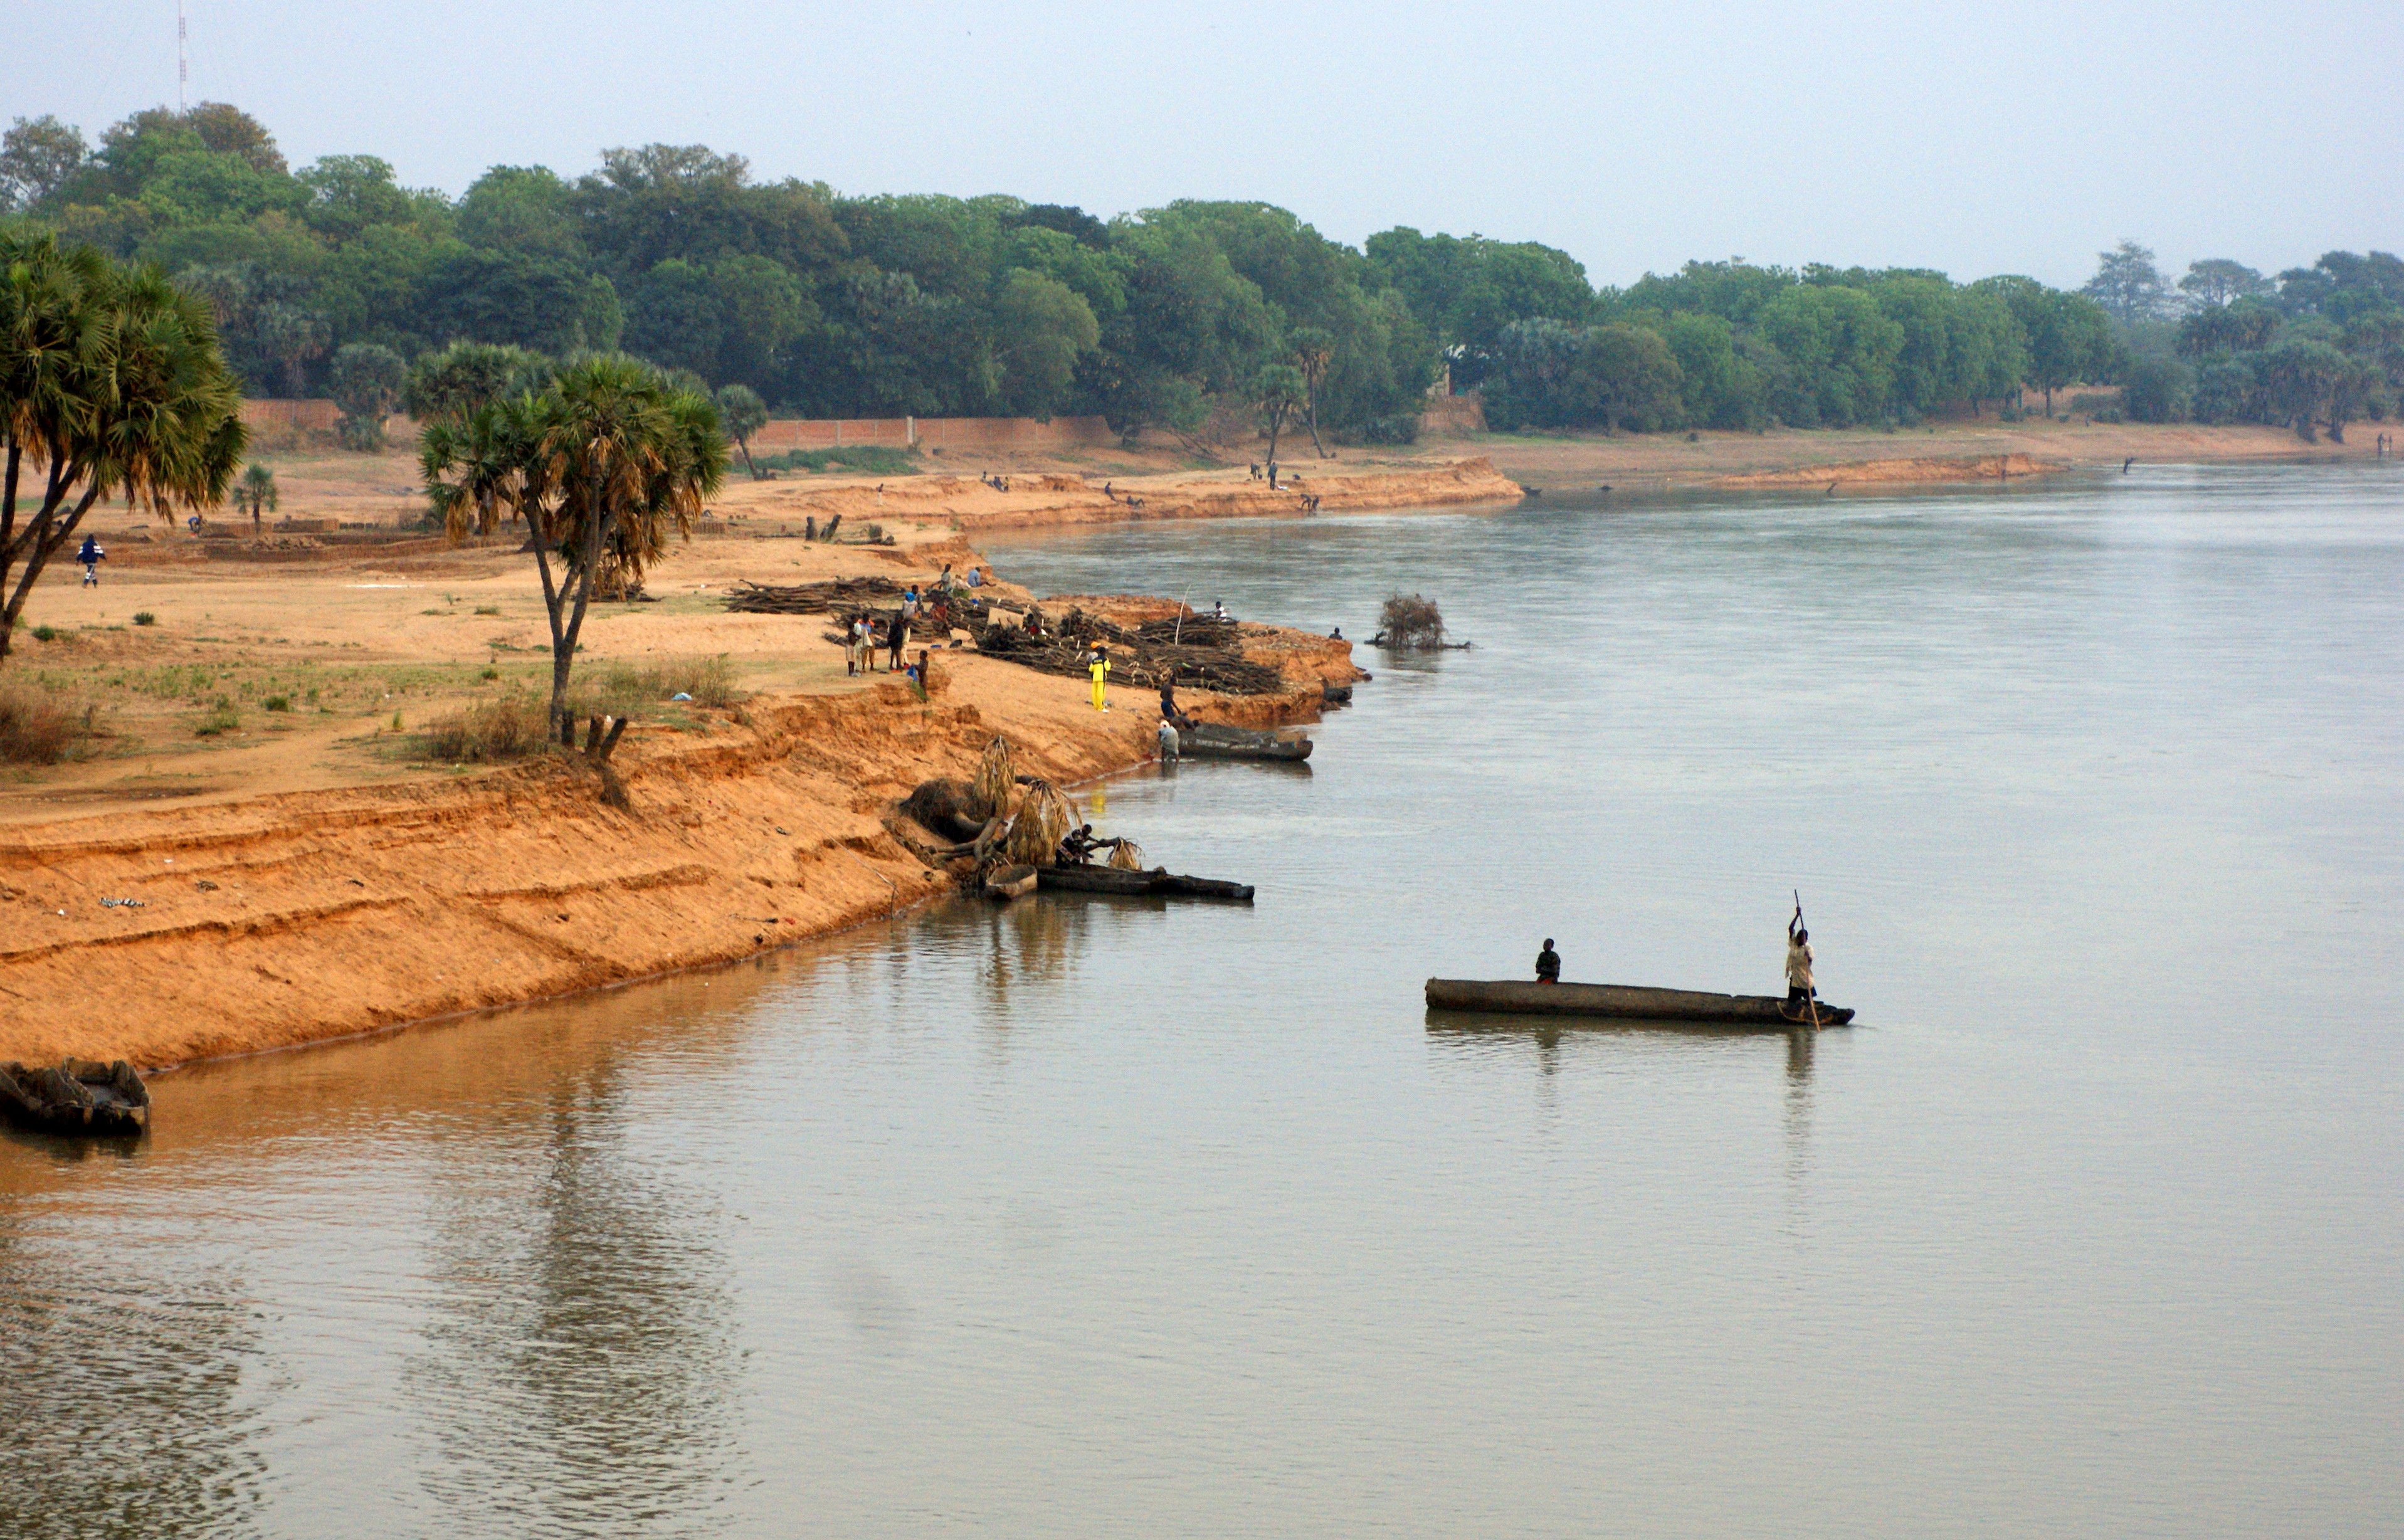  Lake Chad, photograph by Matt Tomalty (CC BY-NC 2.0)